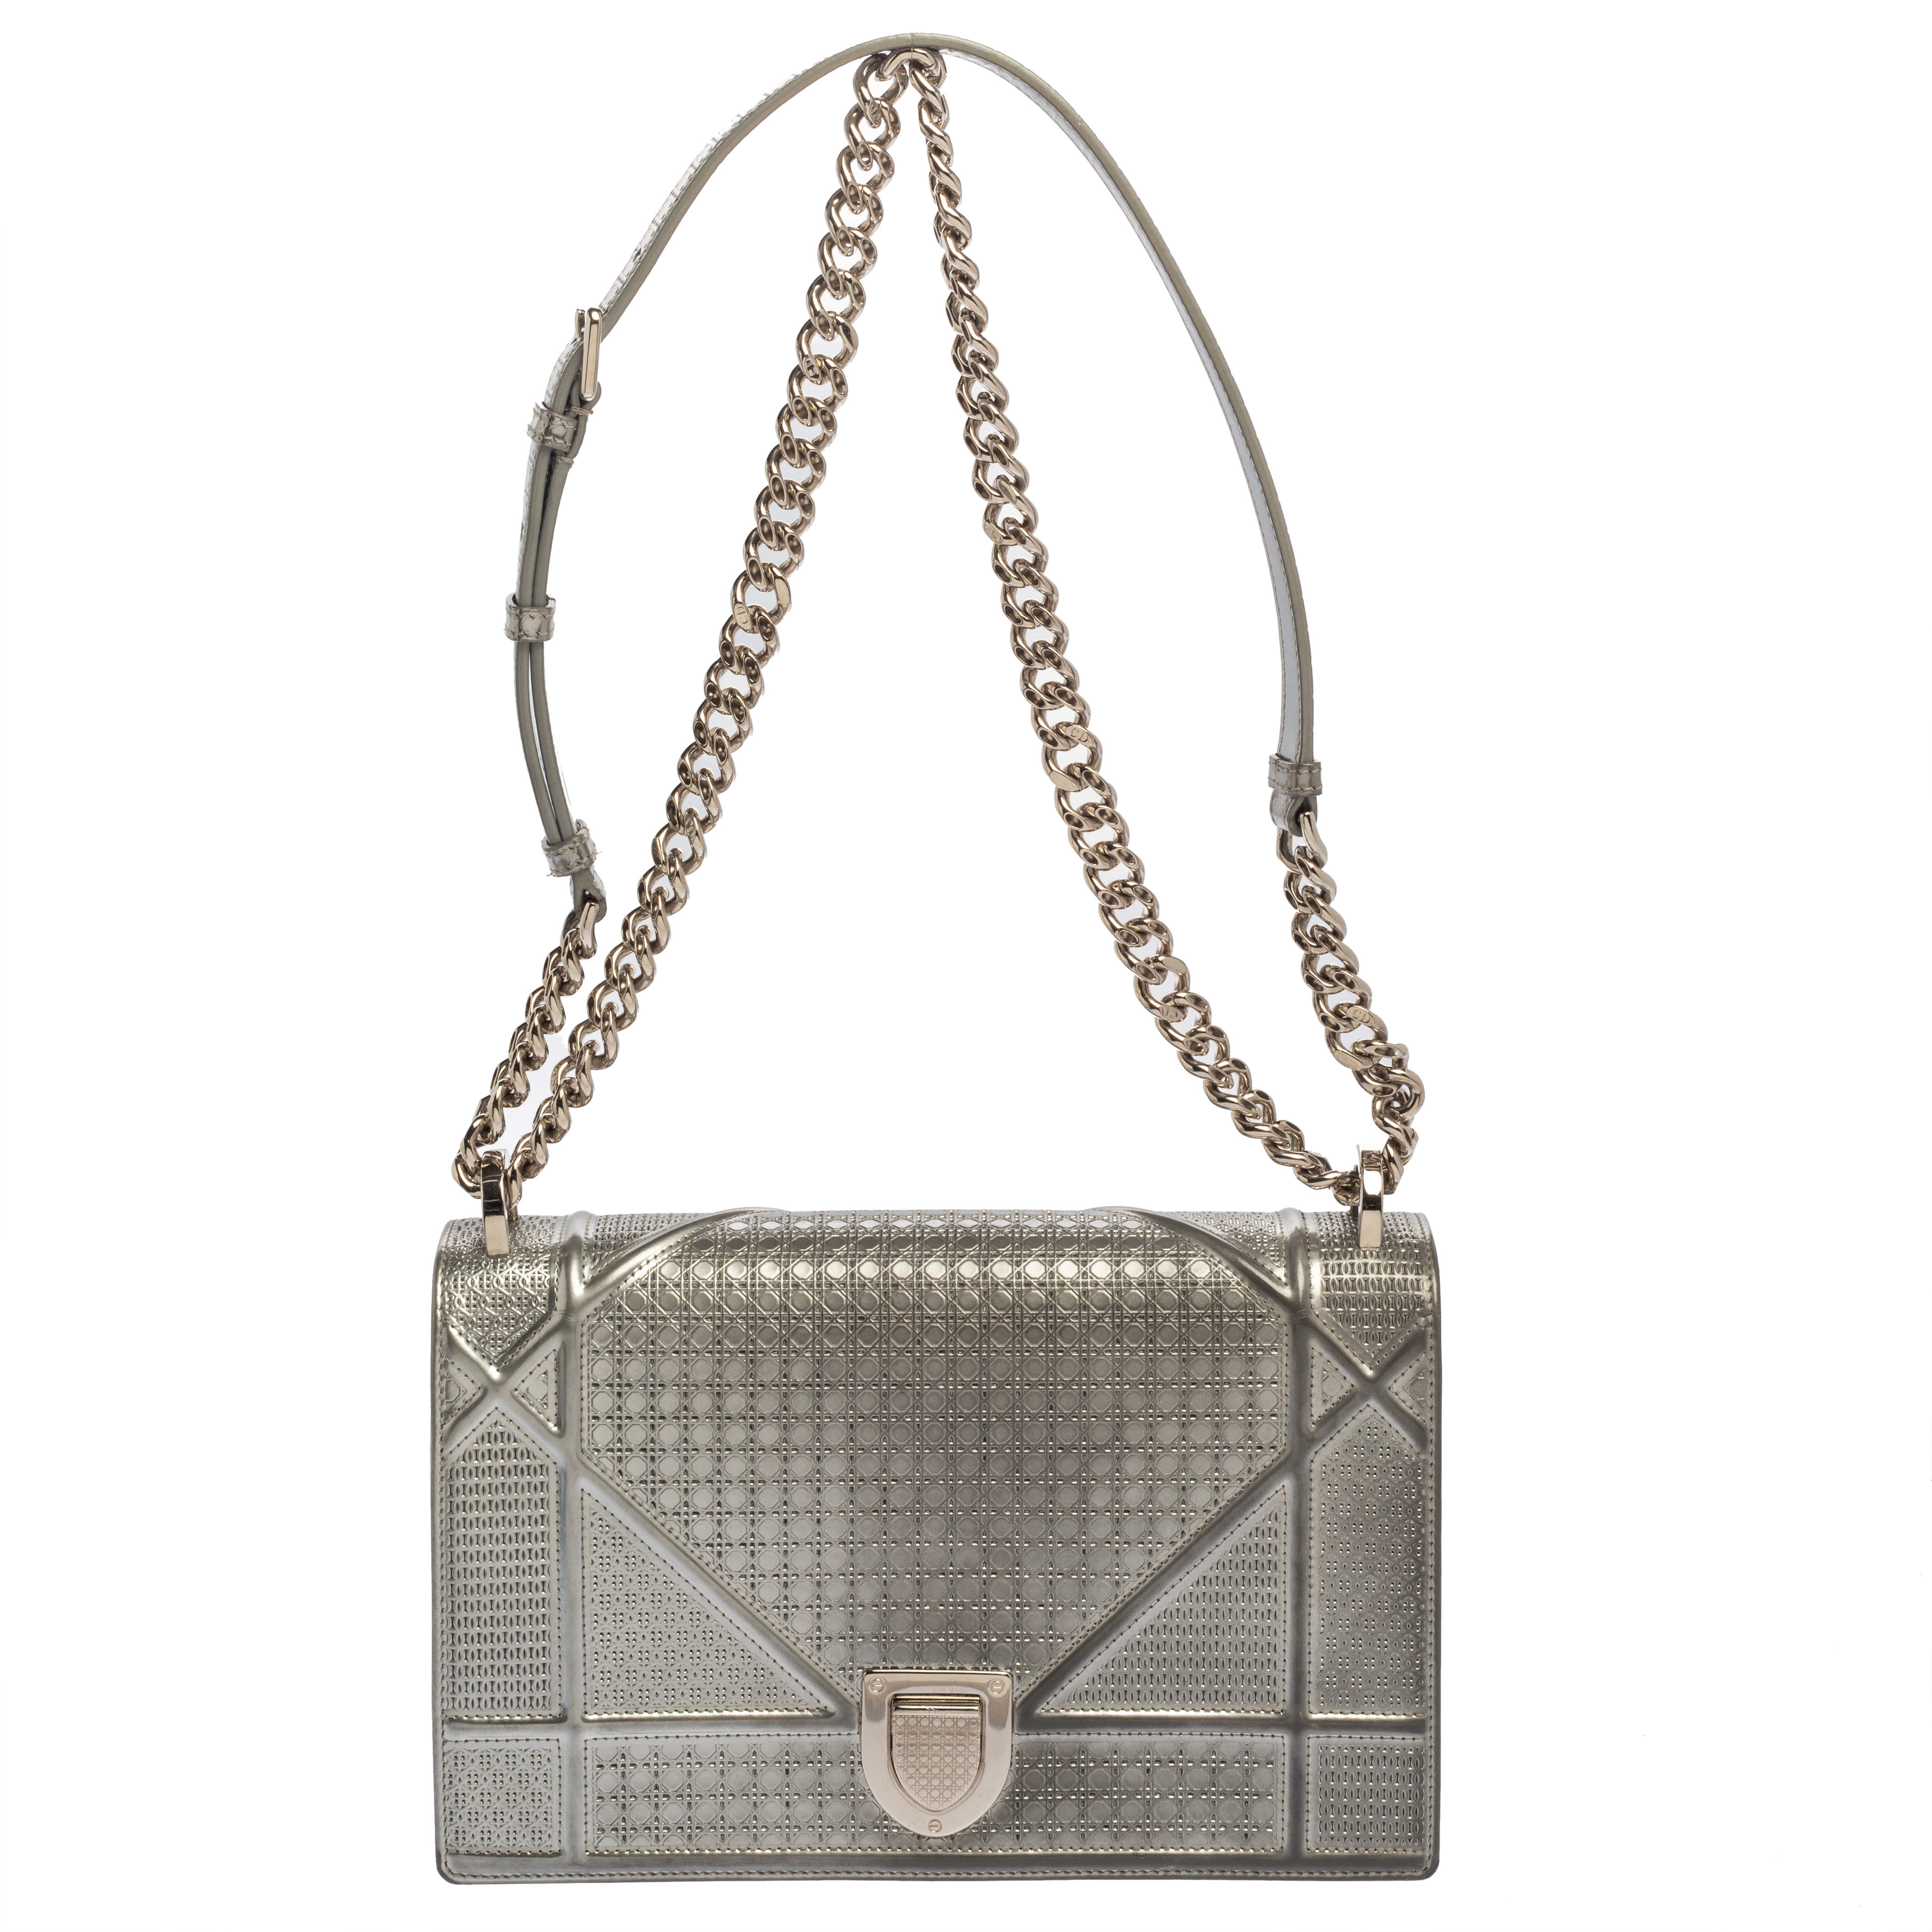 Dior Metallic Silver Microcannage Patent Leather Medium Diorama Shoulder Bag